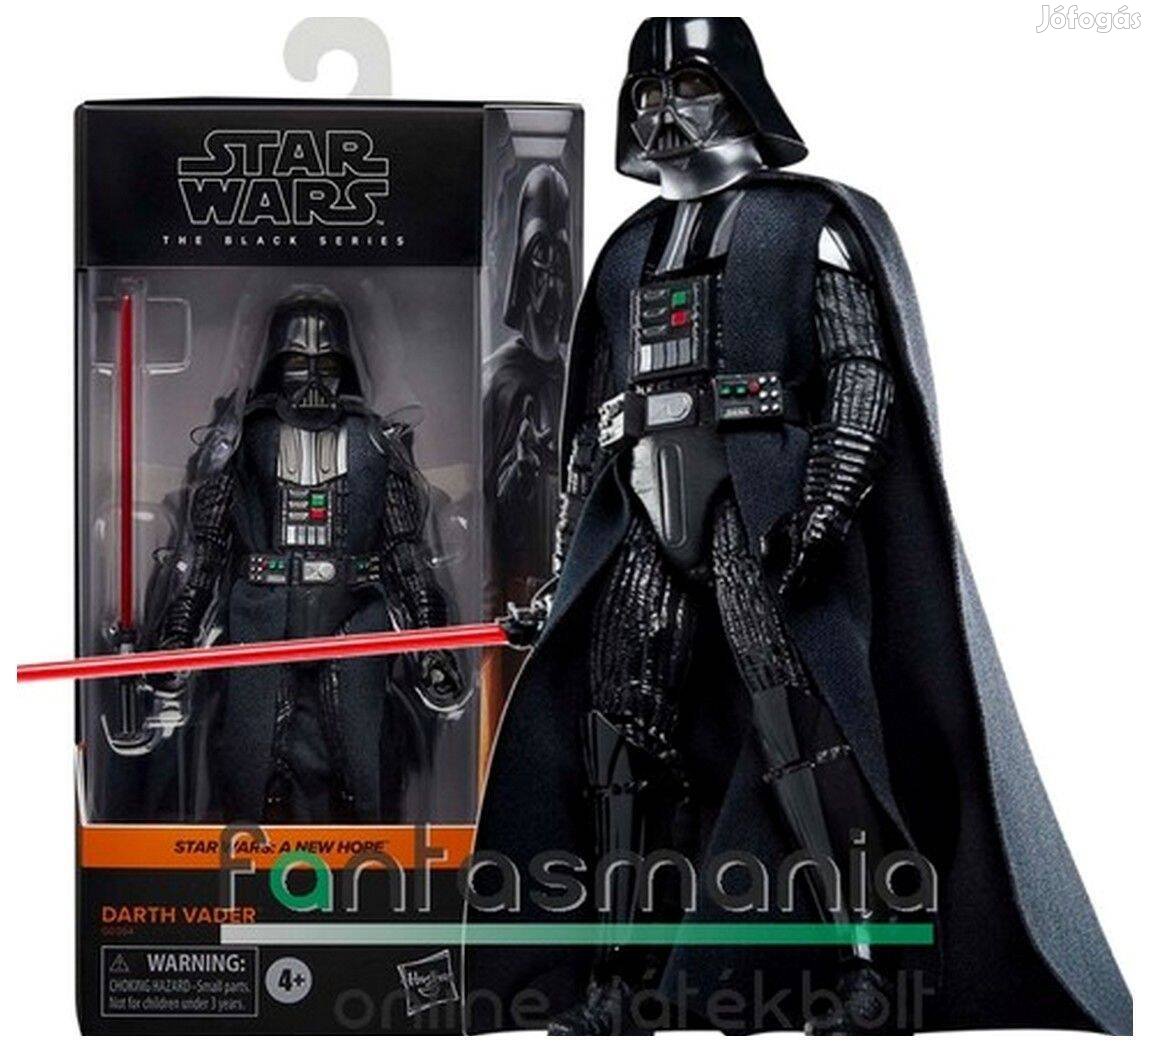 16-18cm Star Wars figura Black Series Darth Vader figura New Hope